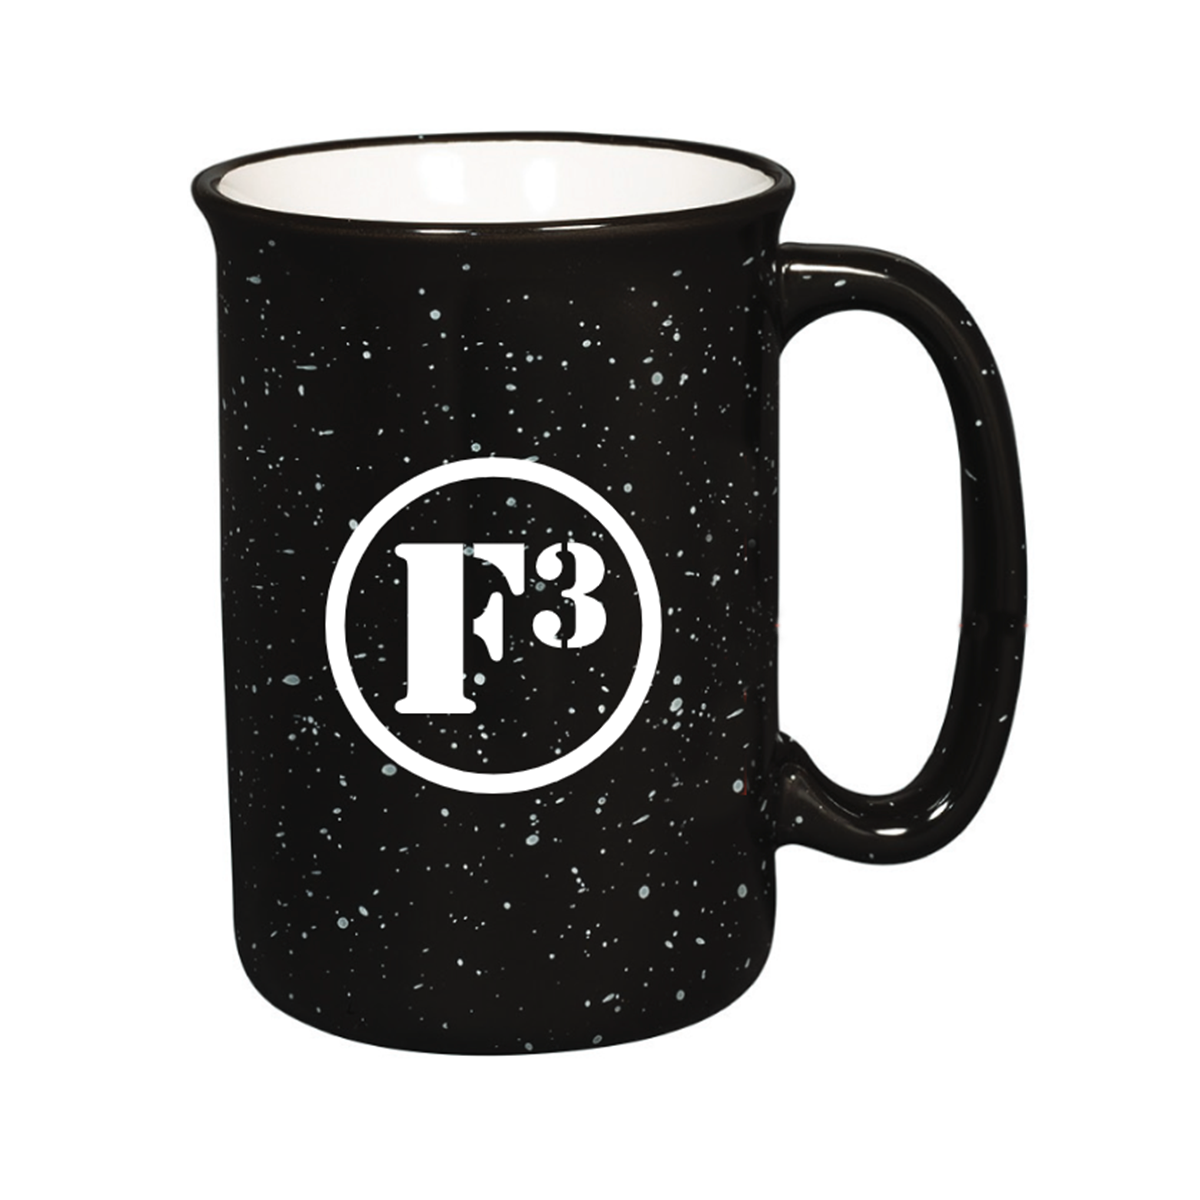 F3 Coffee Mugs